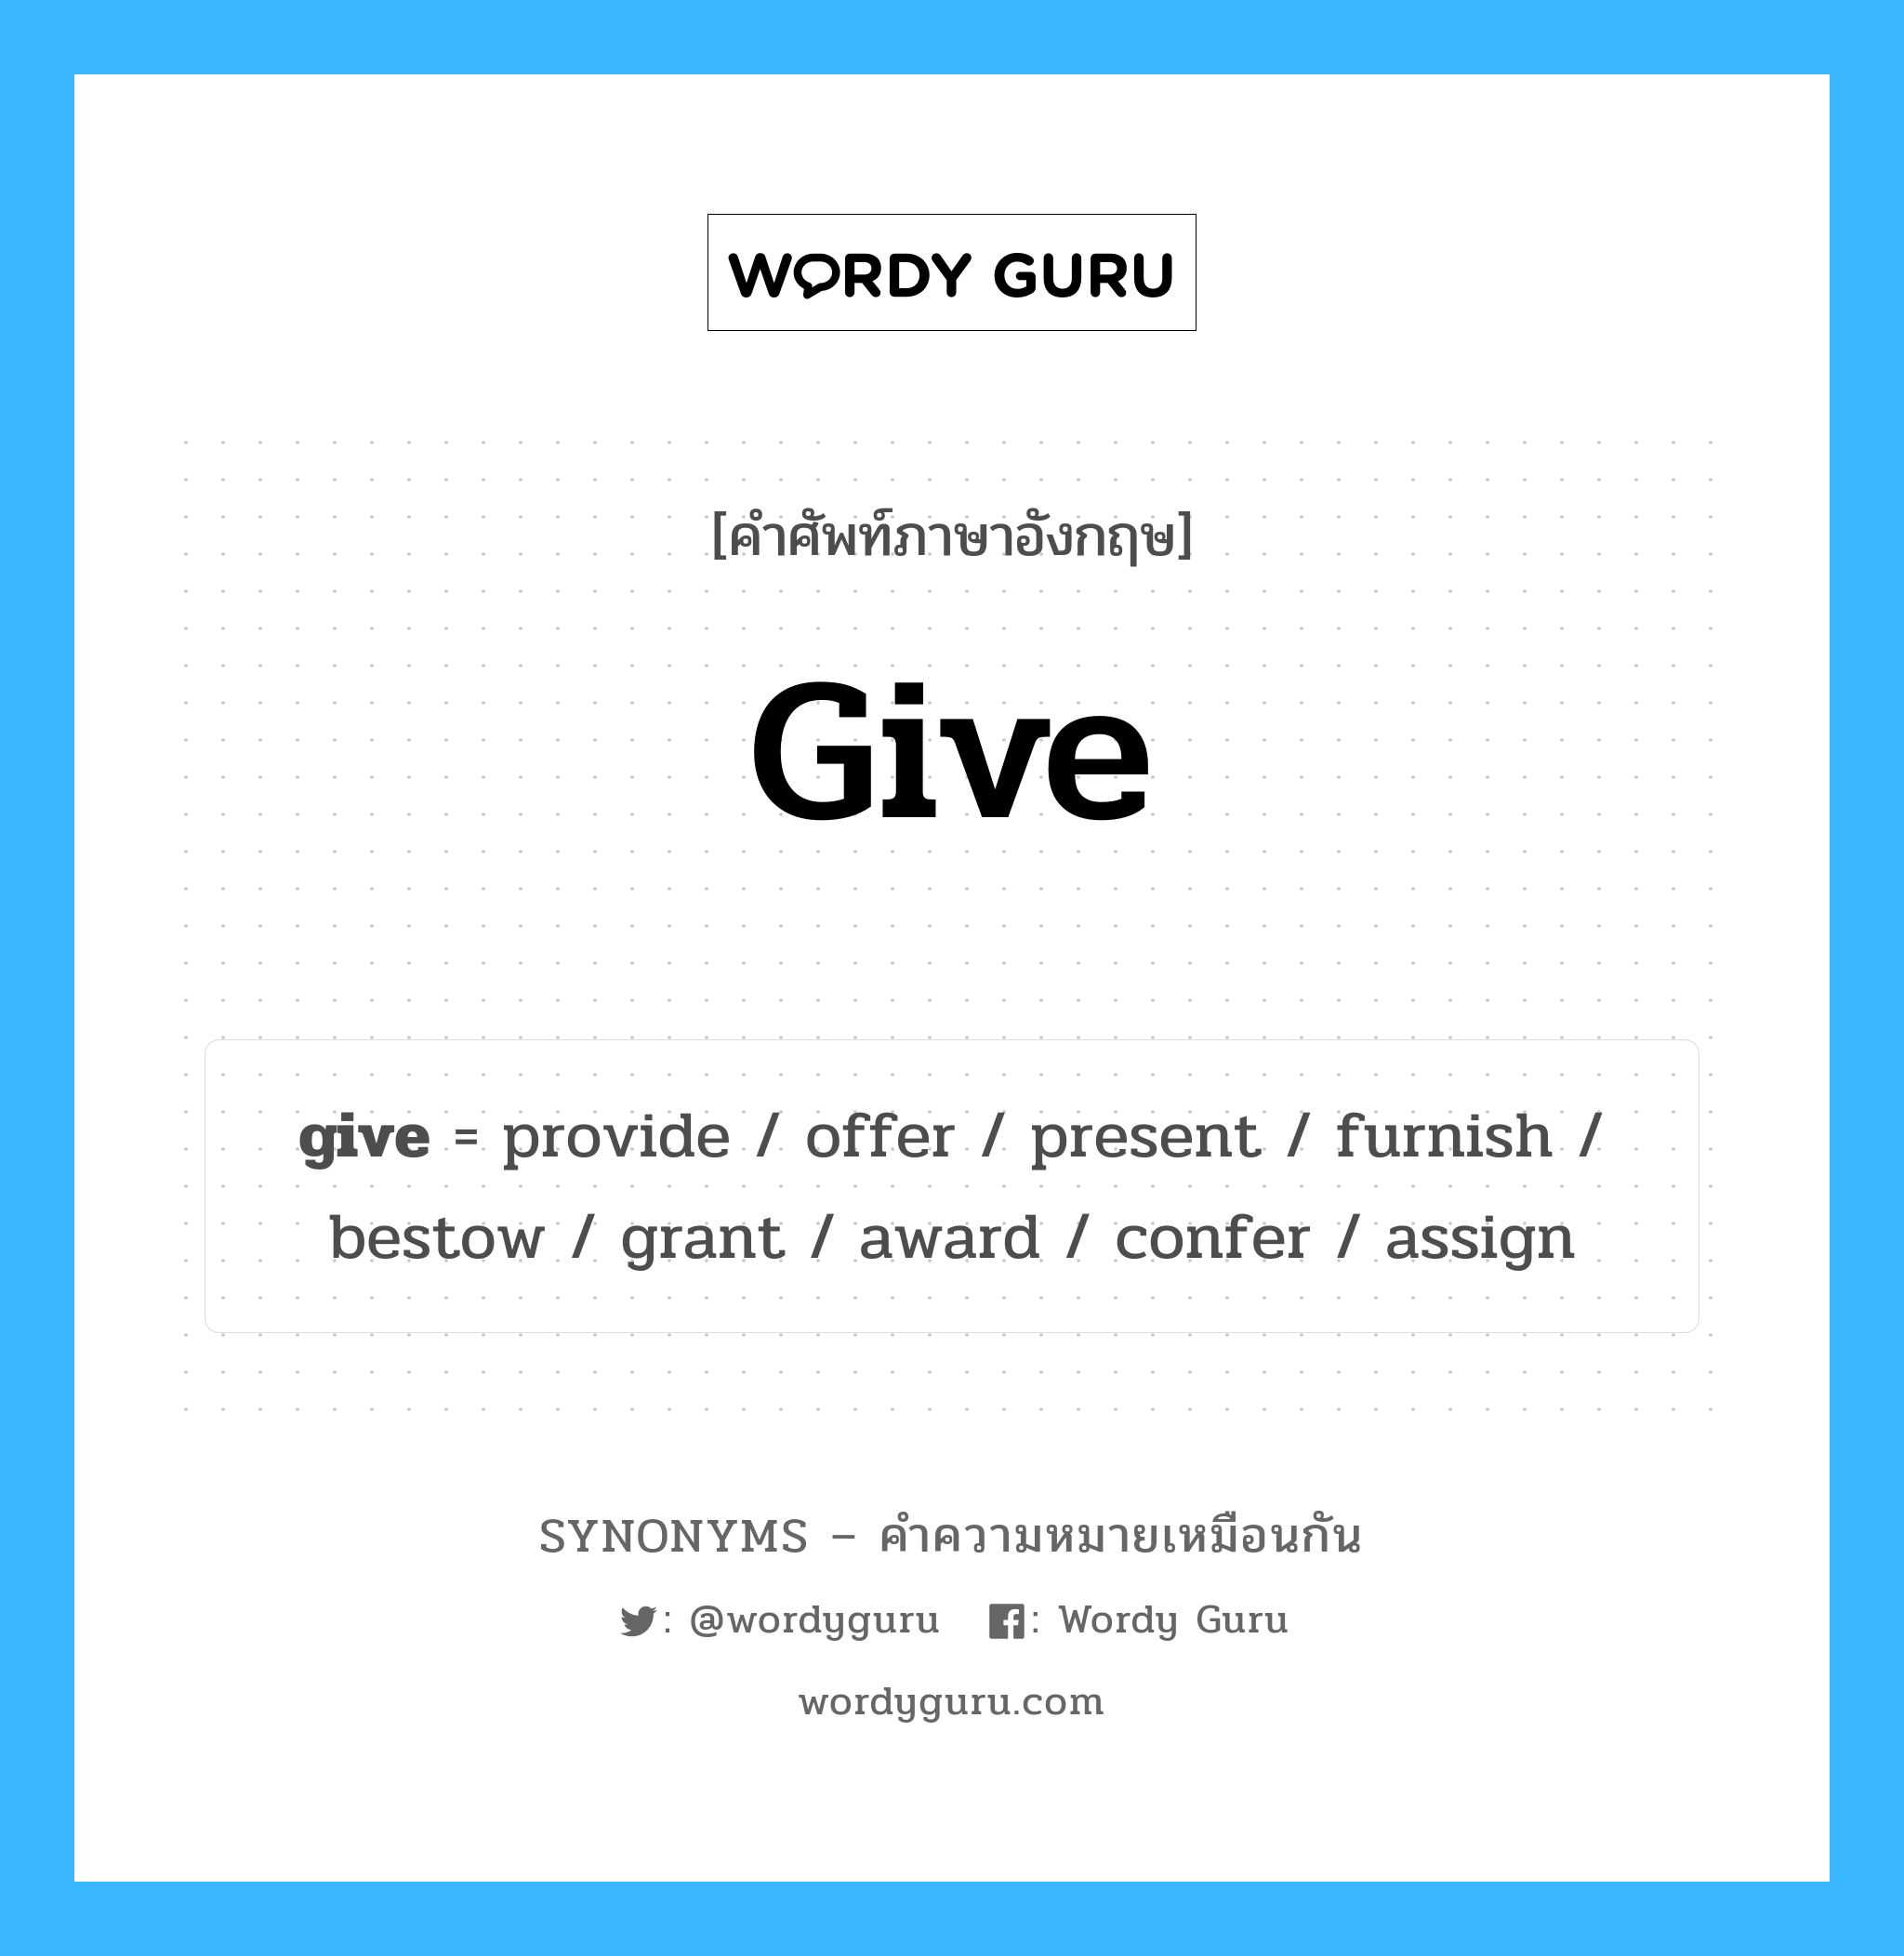 bestow เป็นหนึ่งใน give และมีคำอื่น ๆ อีกดังนี้, คำศัพท์ภาษาอังกฤษ bestow ความหมายคล้ายกันกับ give แปลว่า เปล่งออก หมวด give